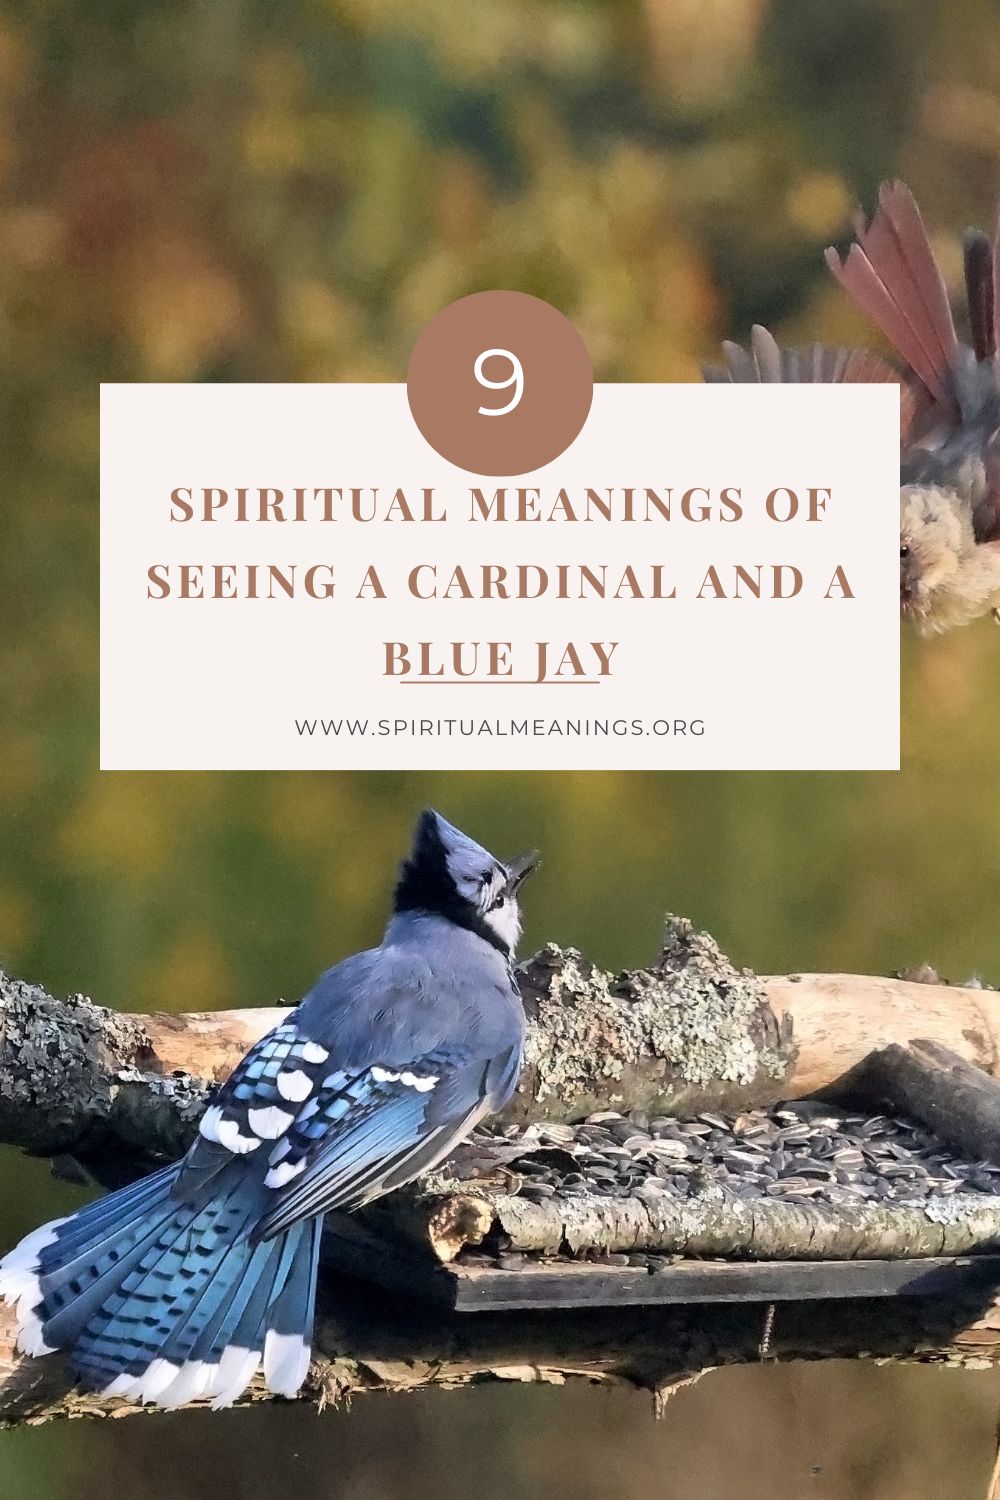 Blue Jay Symbolism & Spiritual Meanings